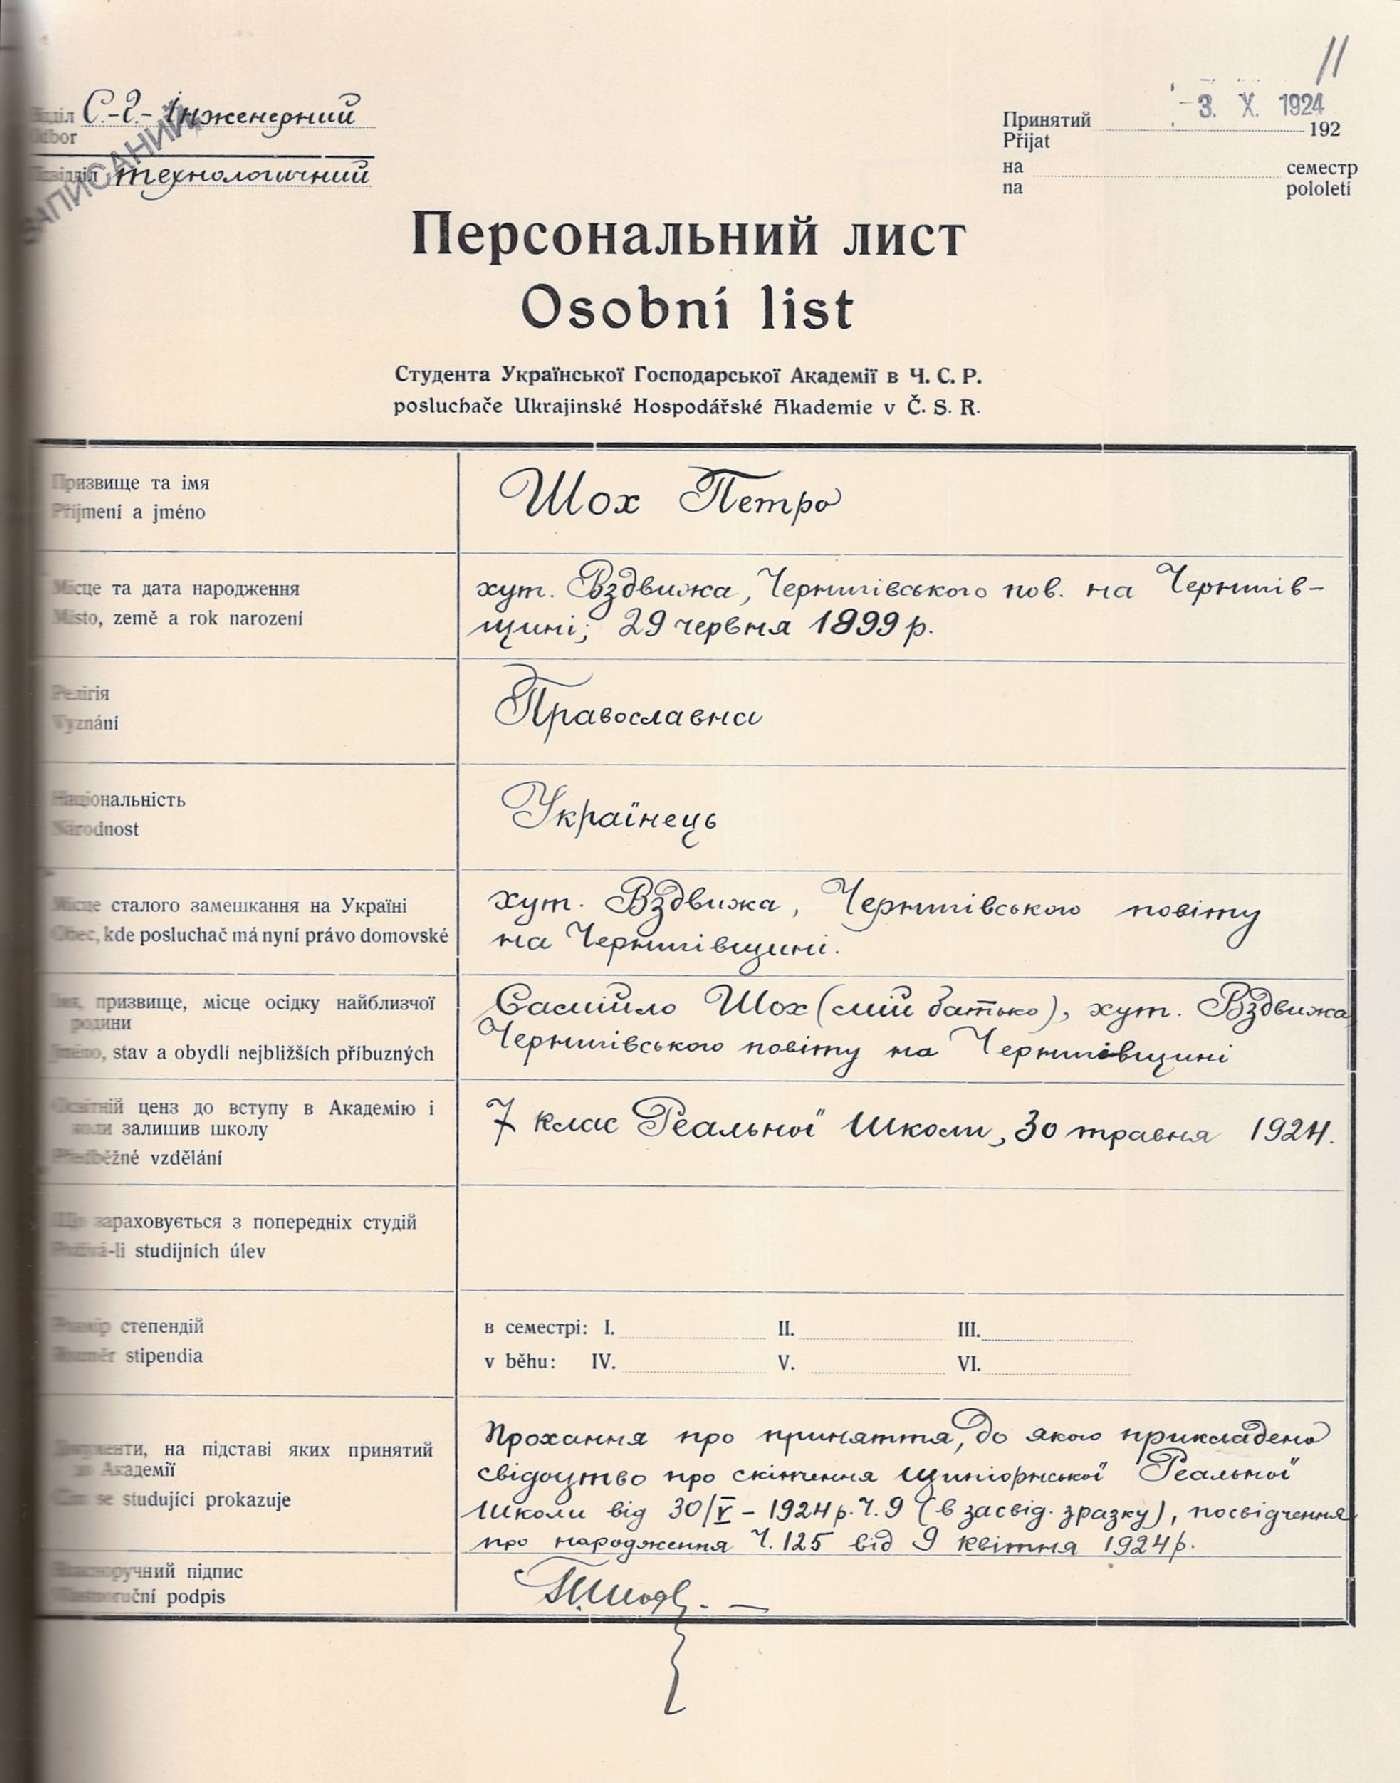 Персональний лист студента Української господарської академії в ЧСР Петра Шоха. 3 жовтня 1924 р.